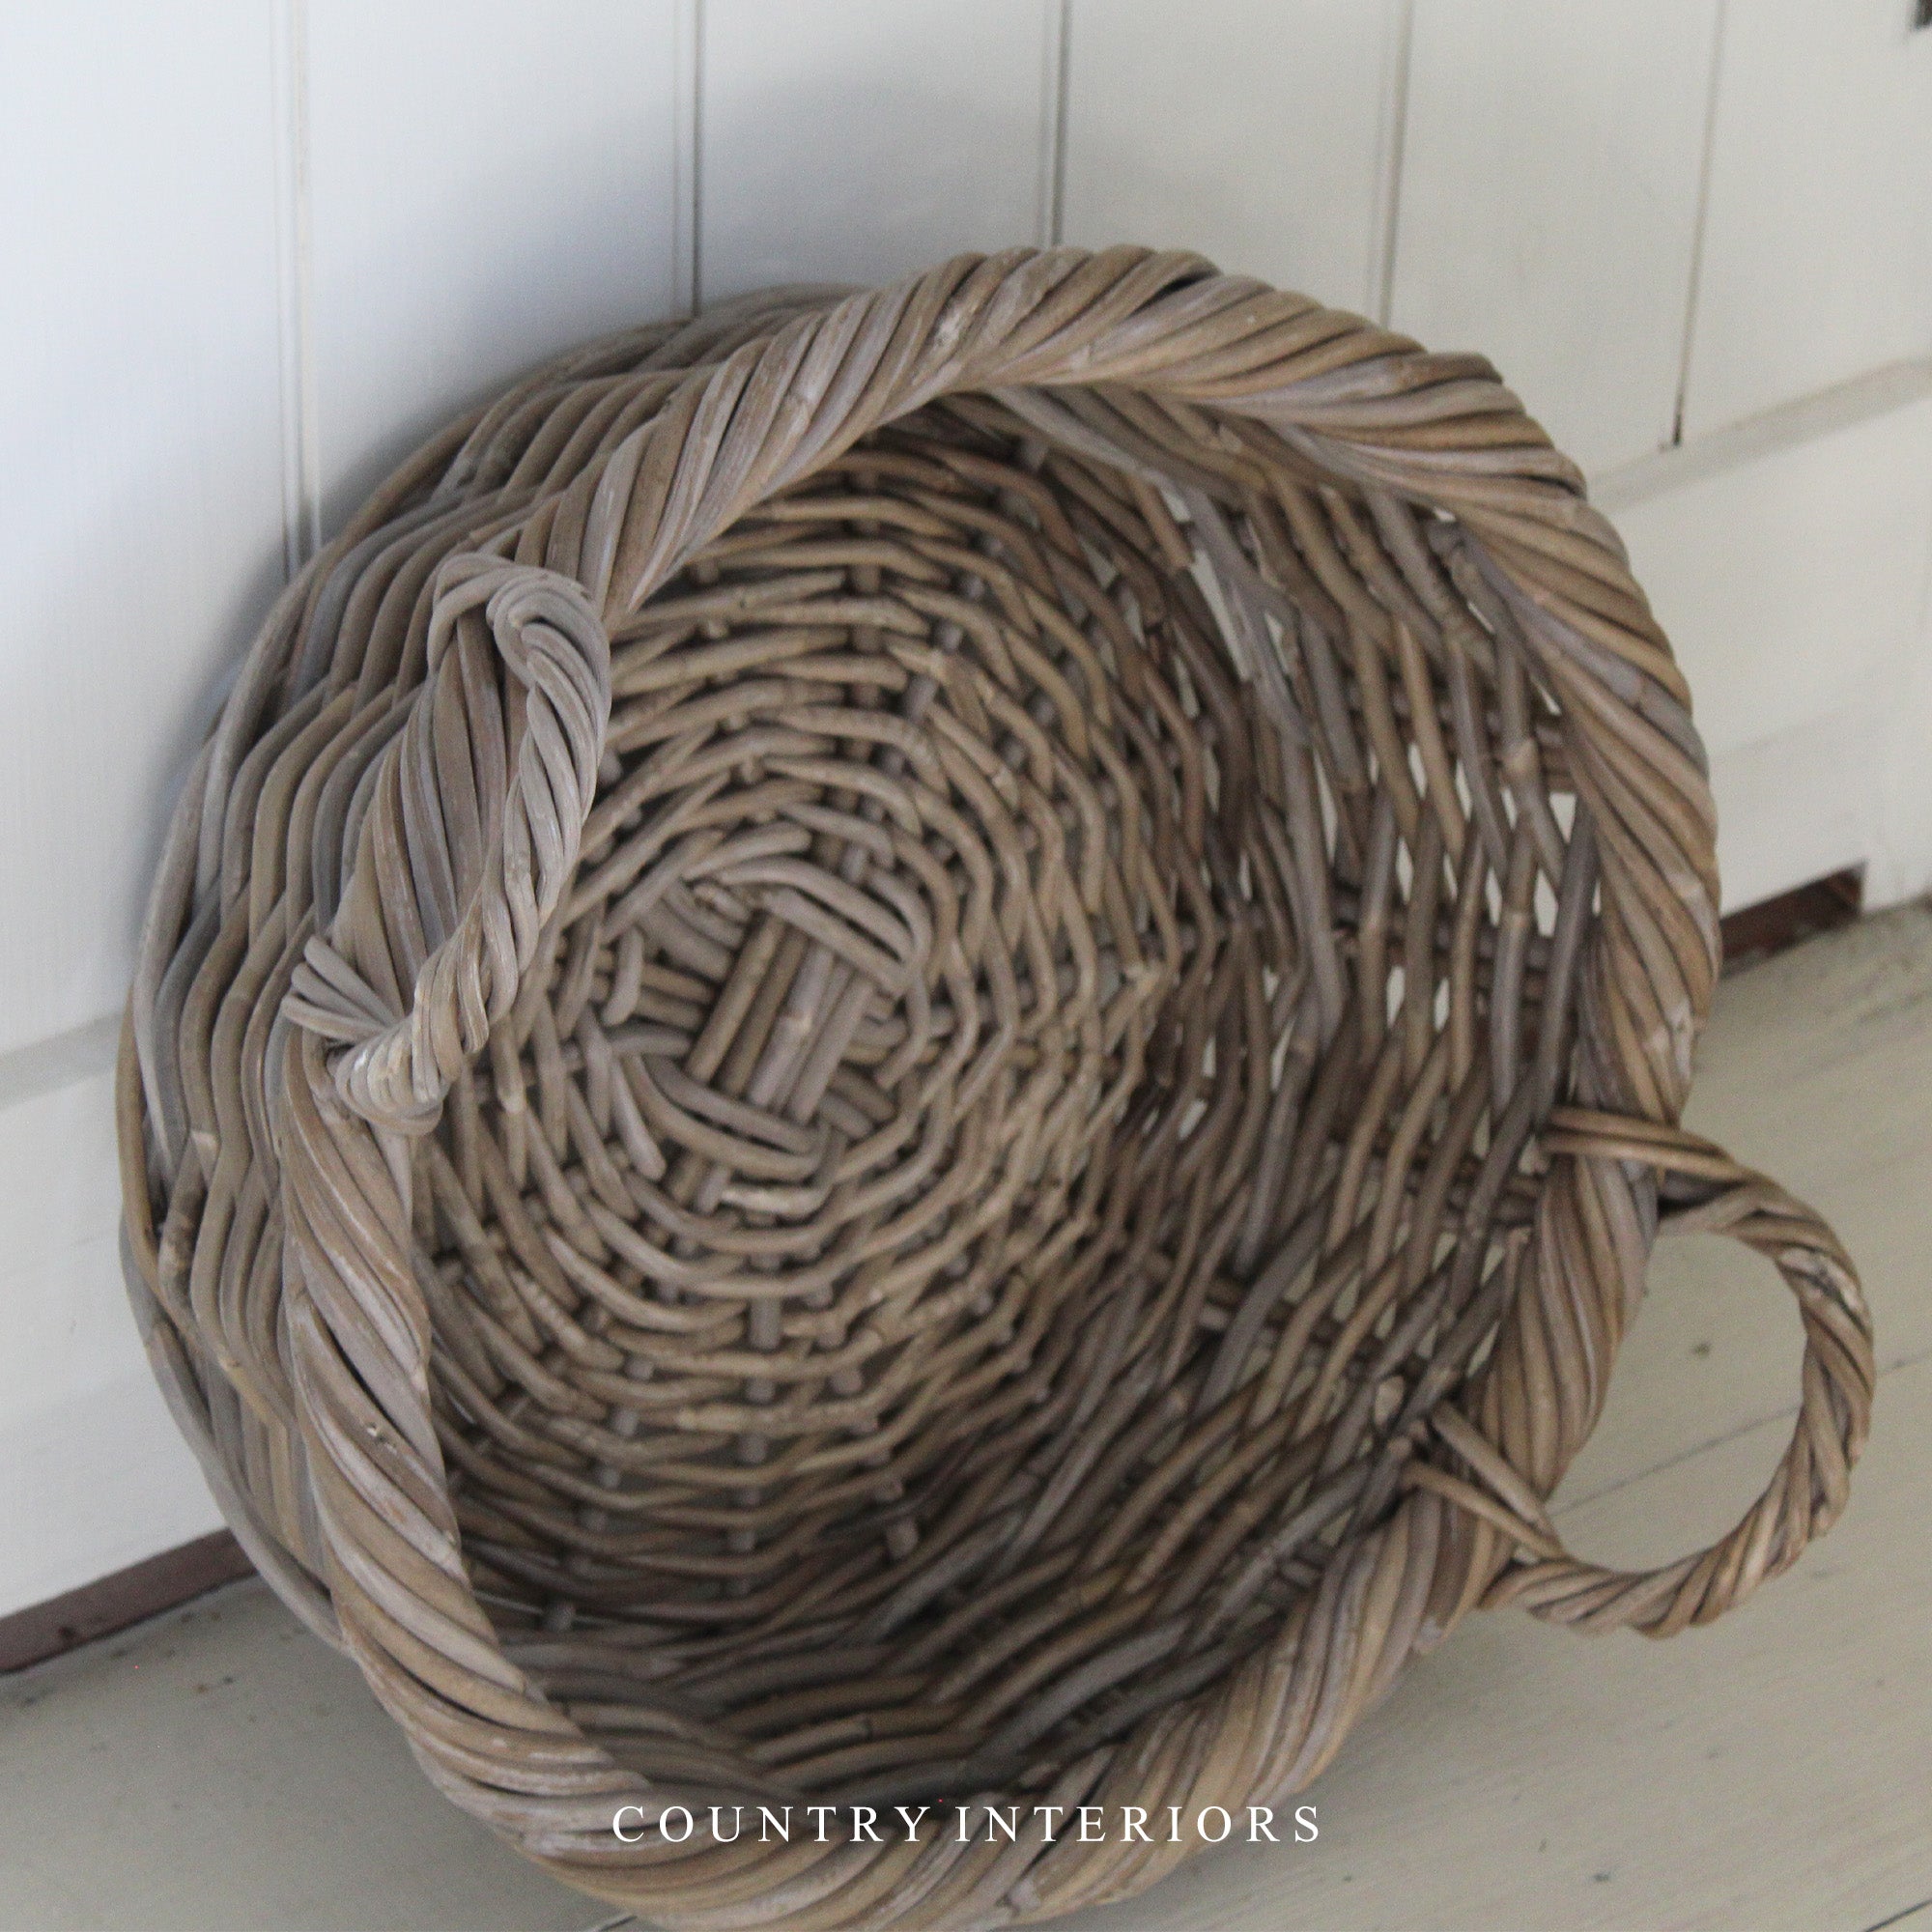 Kubu Basket with Handles and Twisted Rim